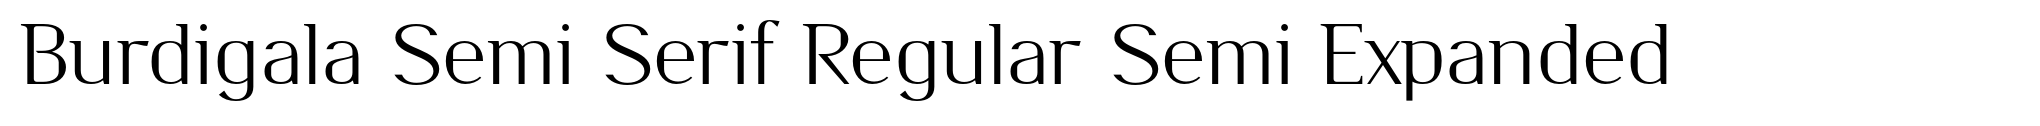 Burdigala Semi Serif Regular Semi Expanded image